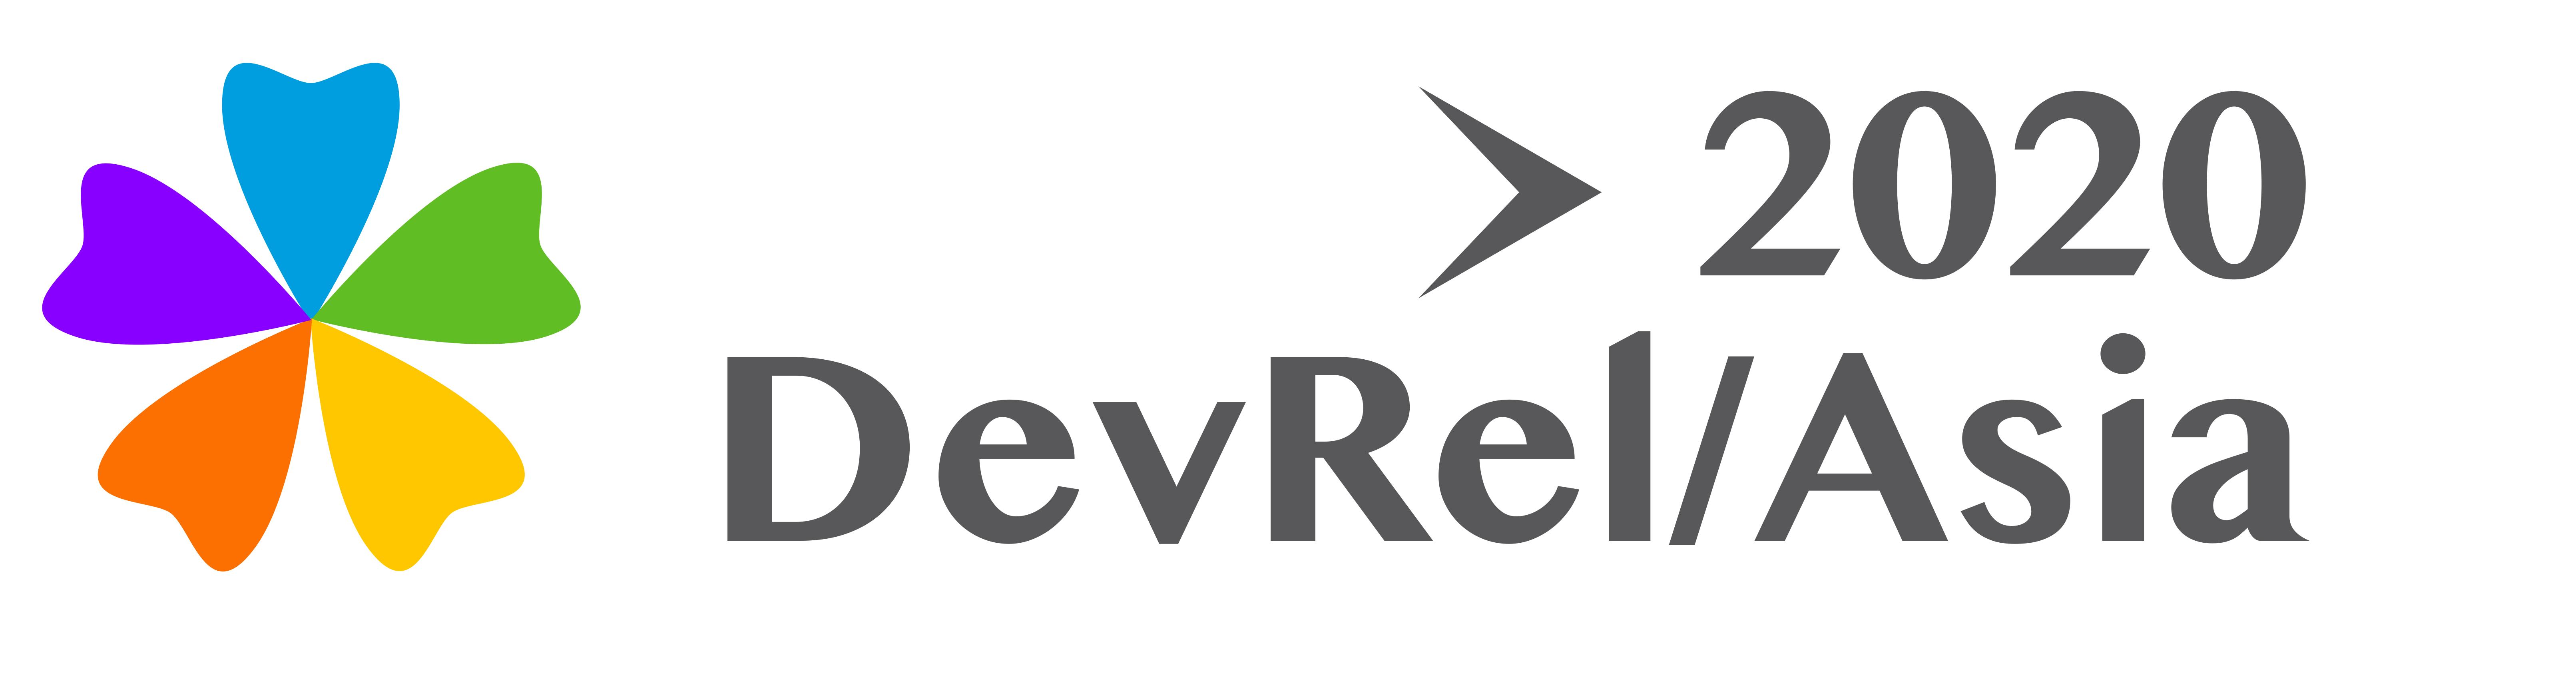 DevRel Asia 2020 Logo